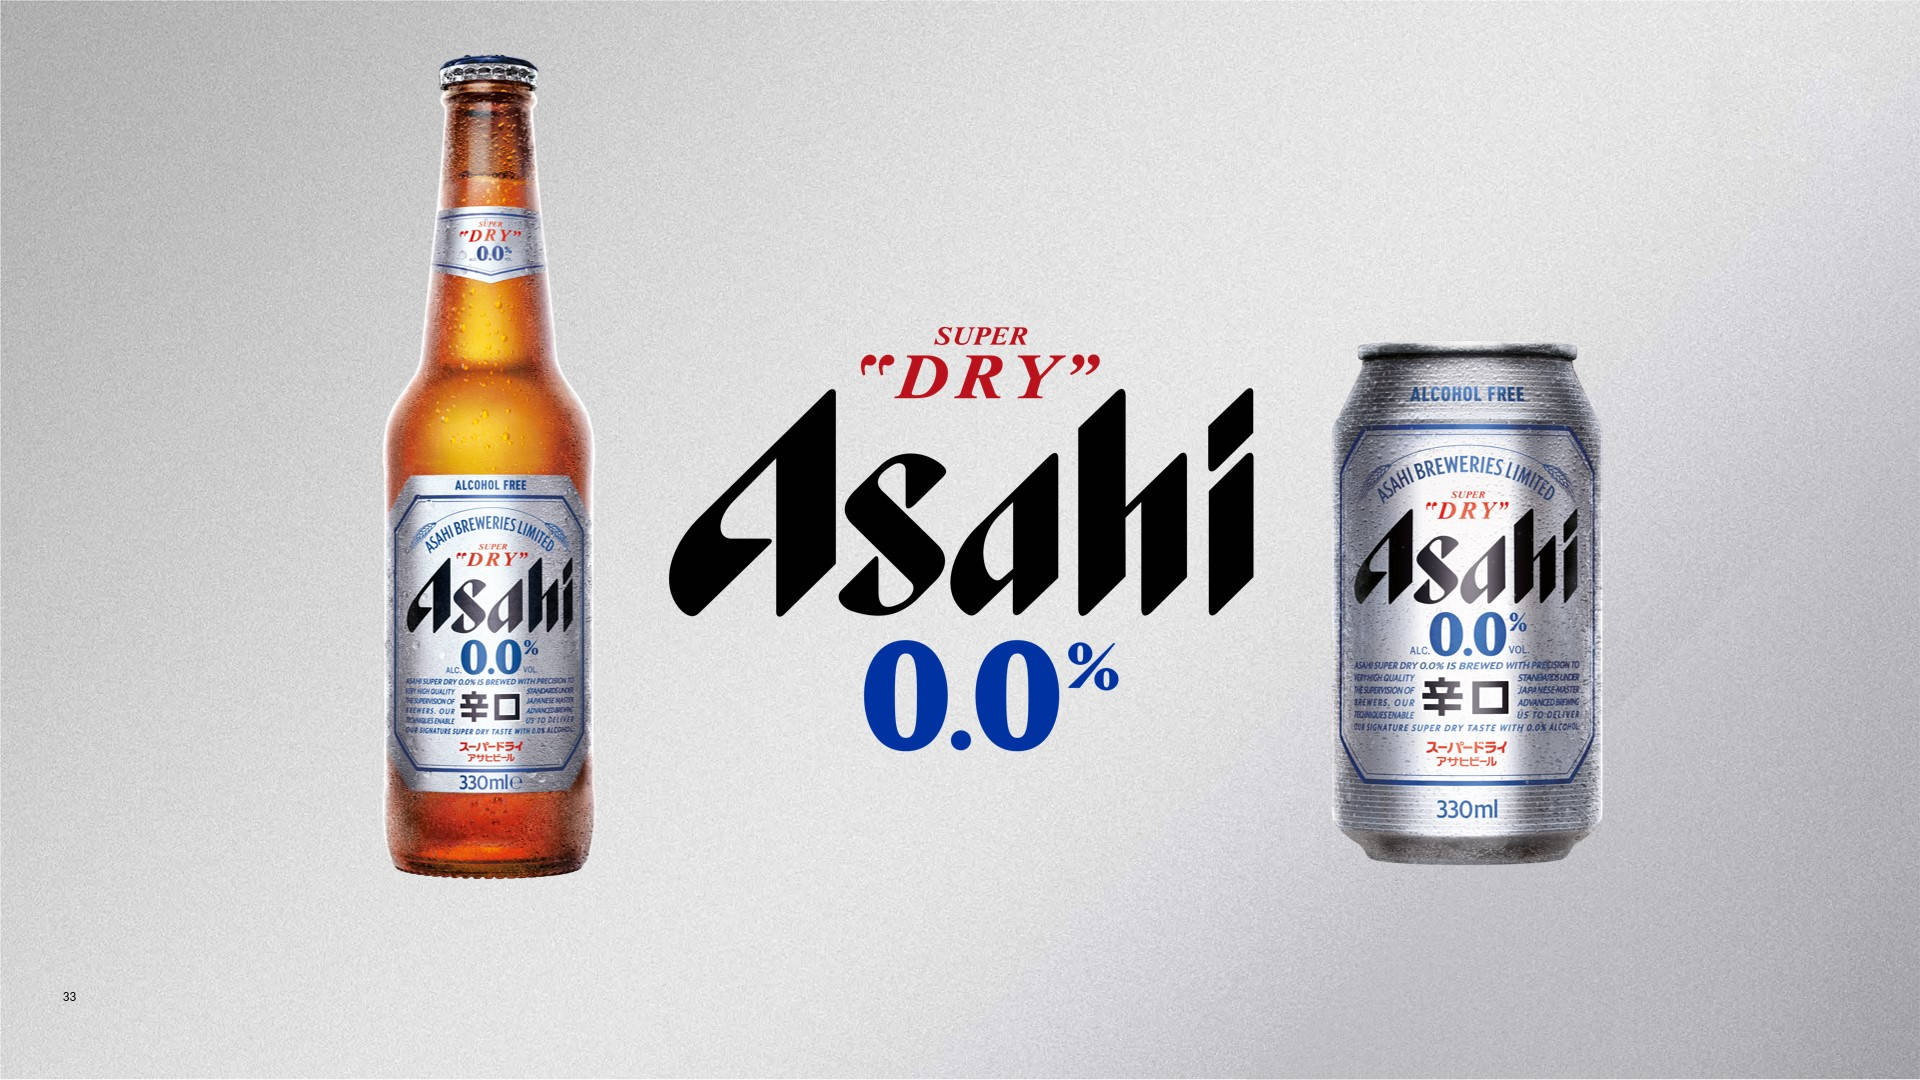 Asahi Super Dry Uk Picture